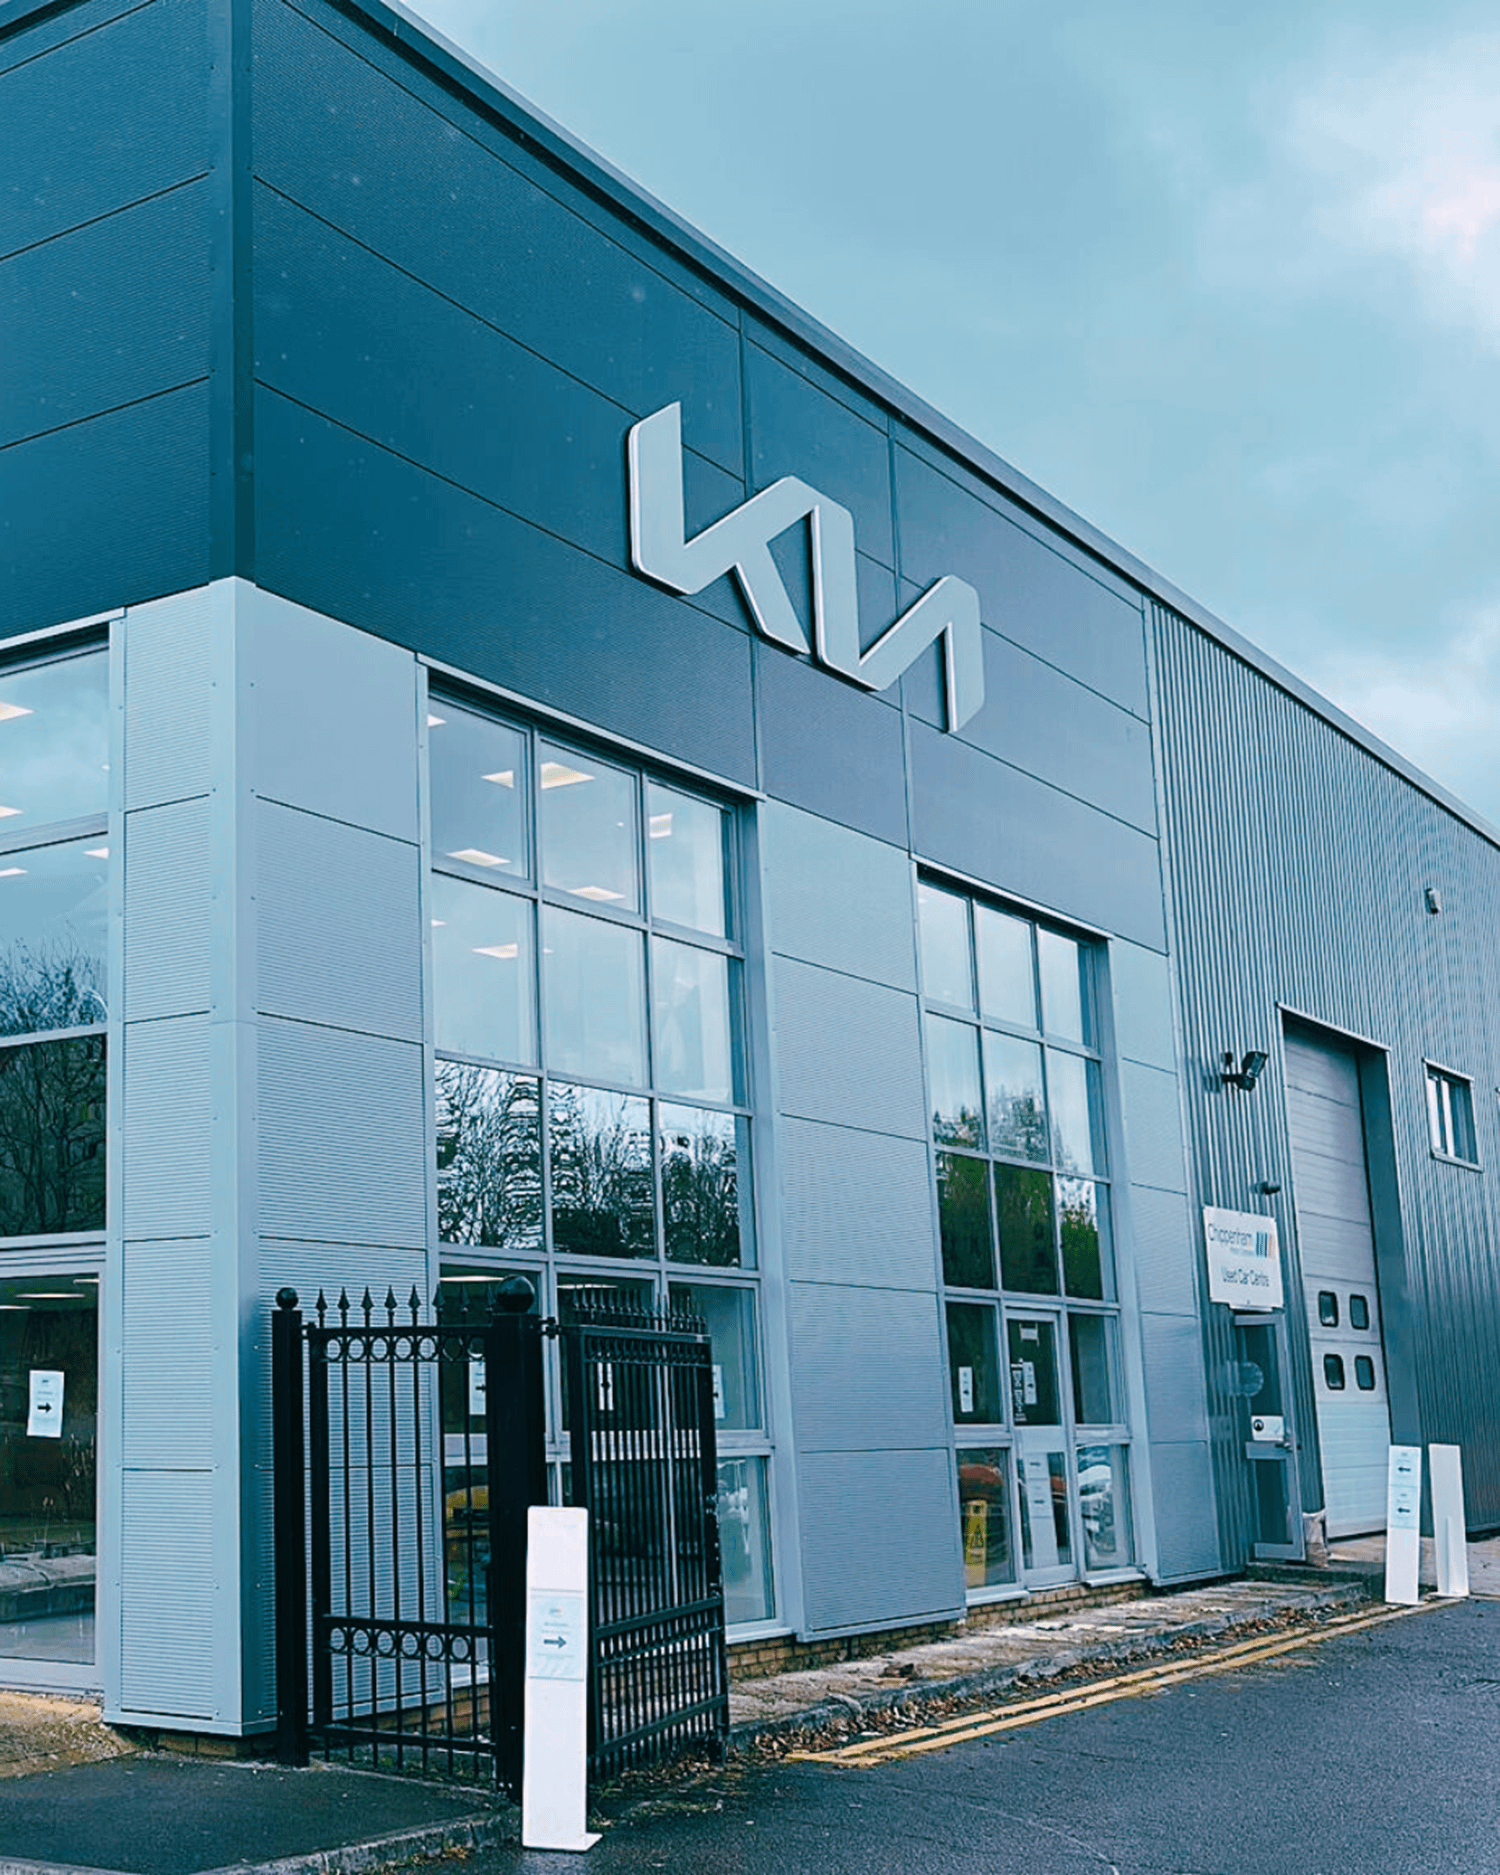 New Kia signs on the Chippenham Motor Company building